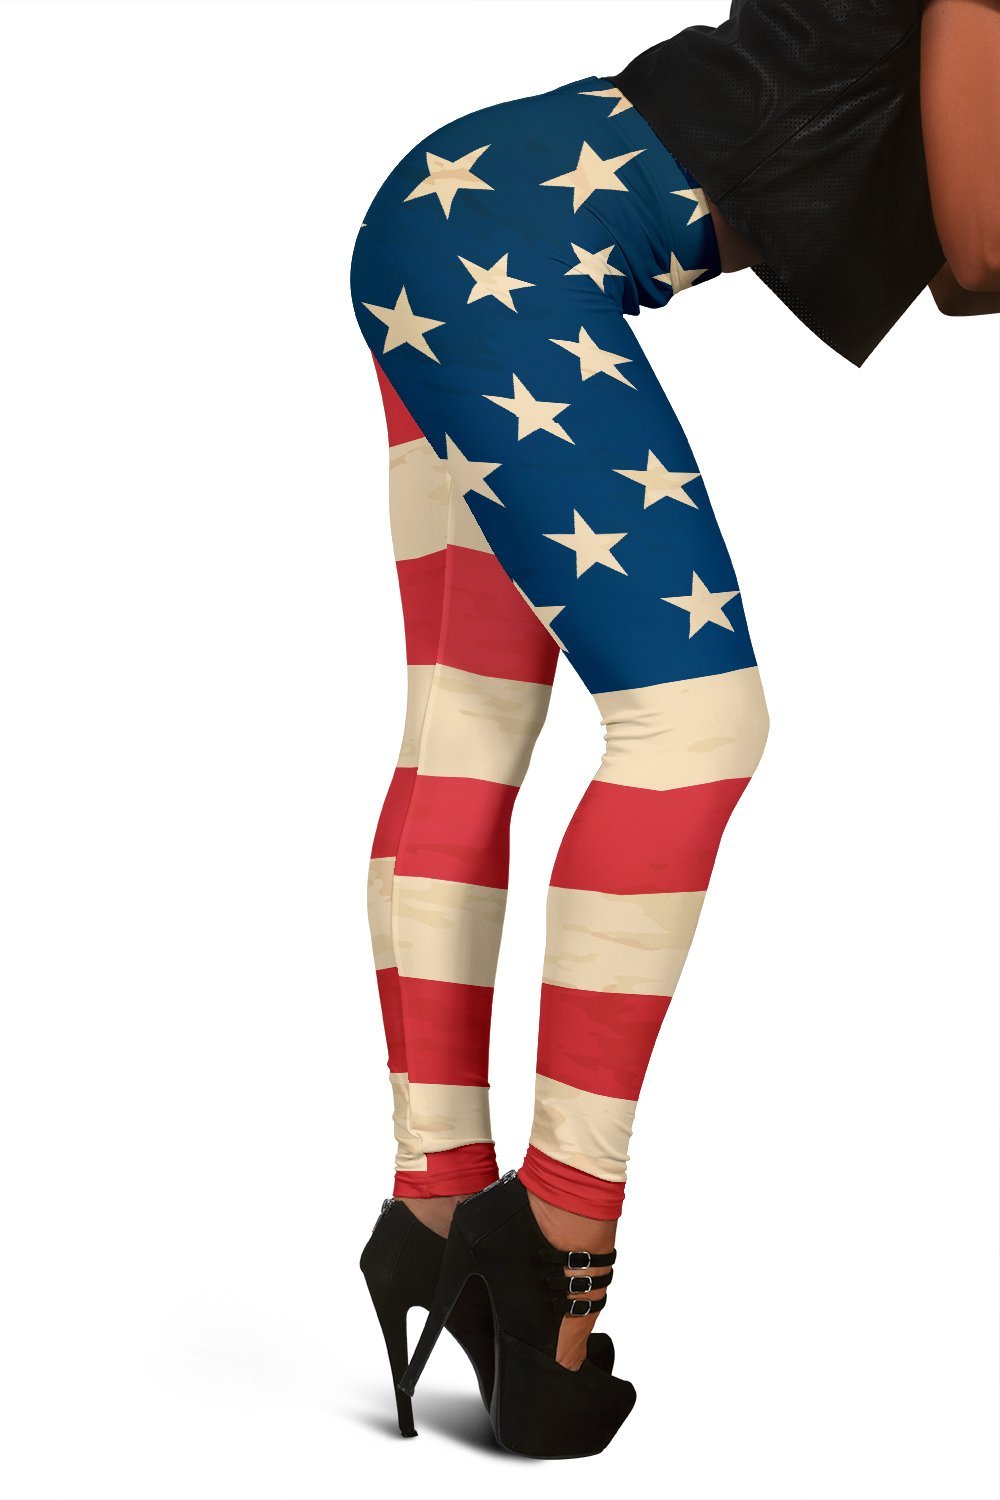 Retro American Flag Patriotic Women's Leggings GearFrost